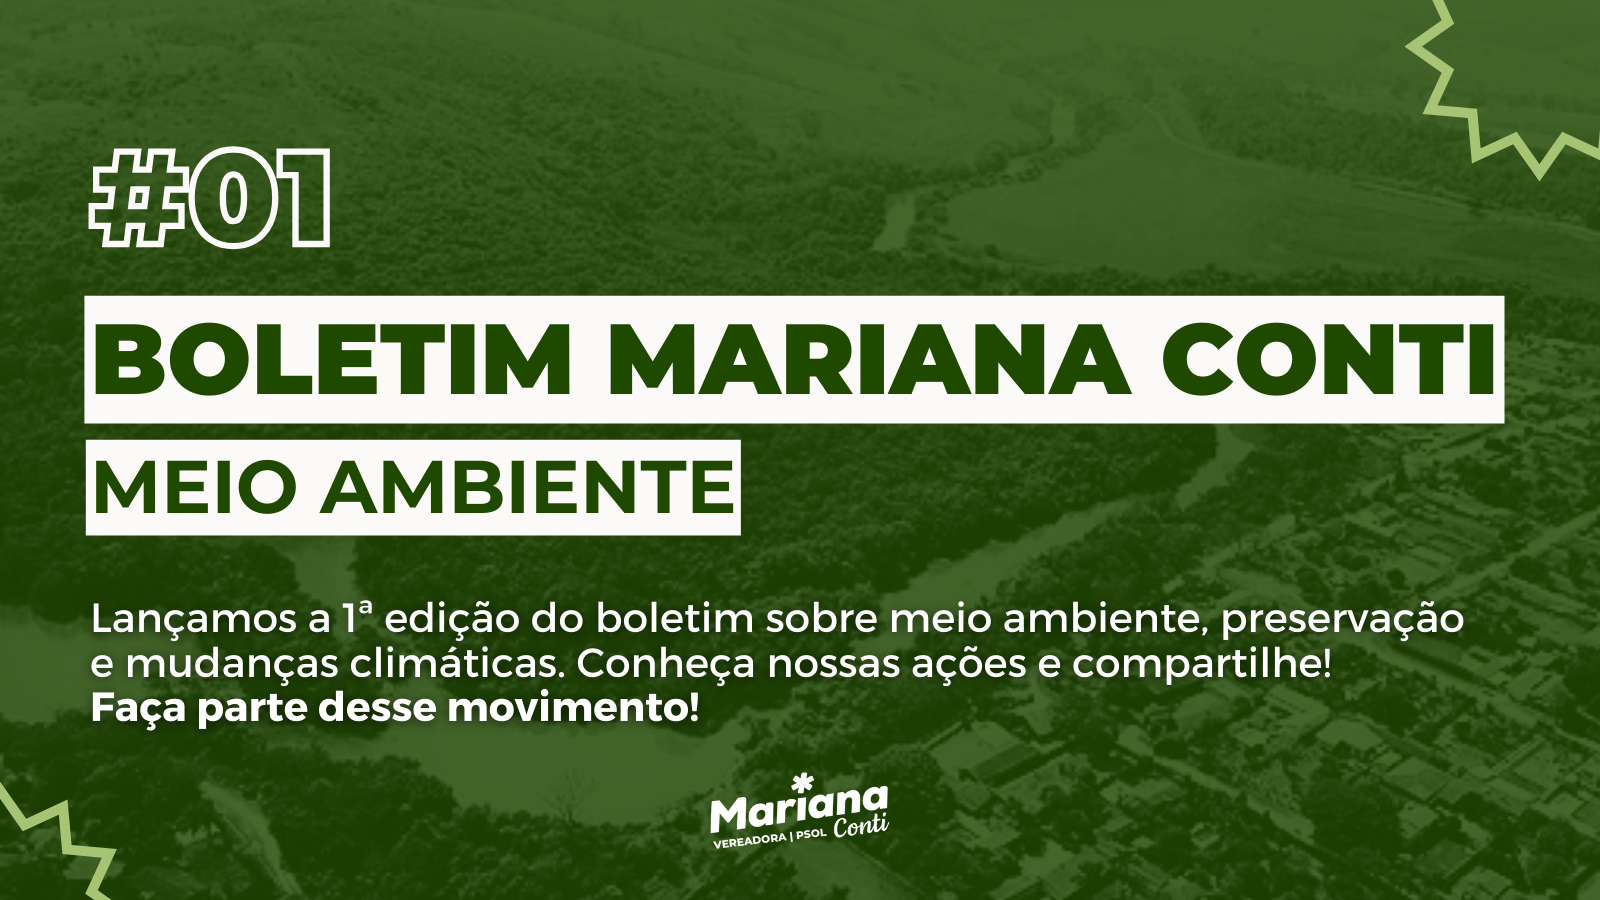 #01 Boletim Mariana Conti – Meio Ambiente